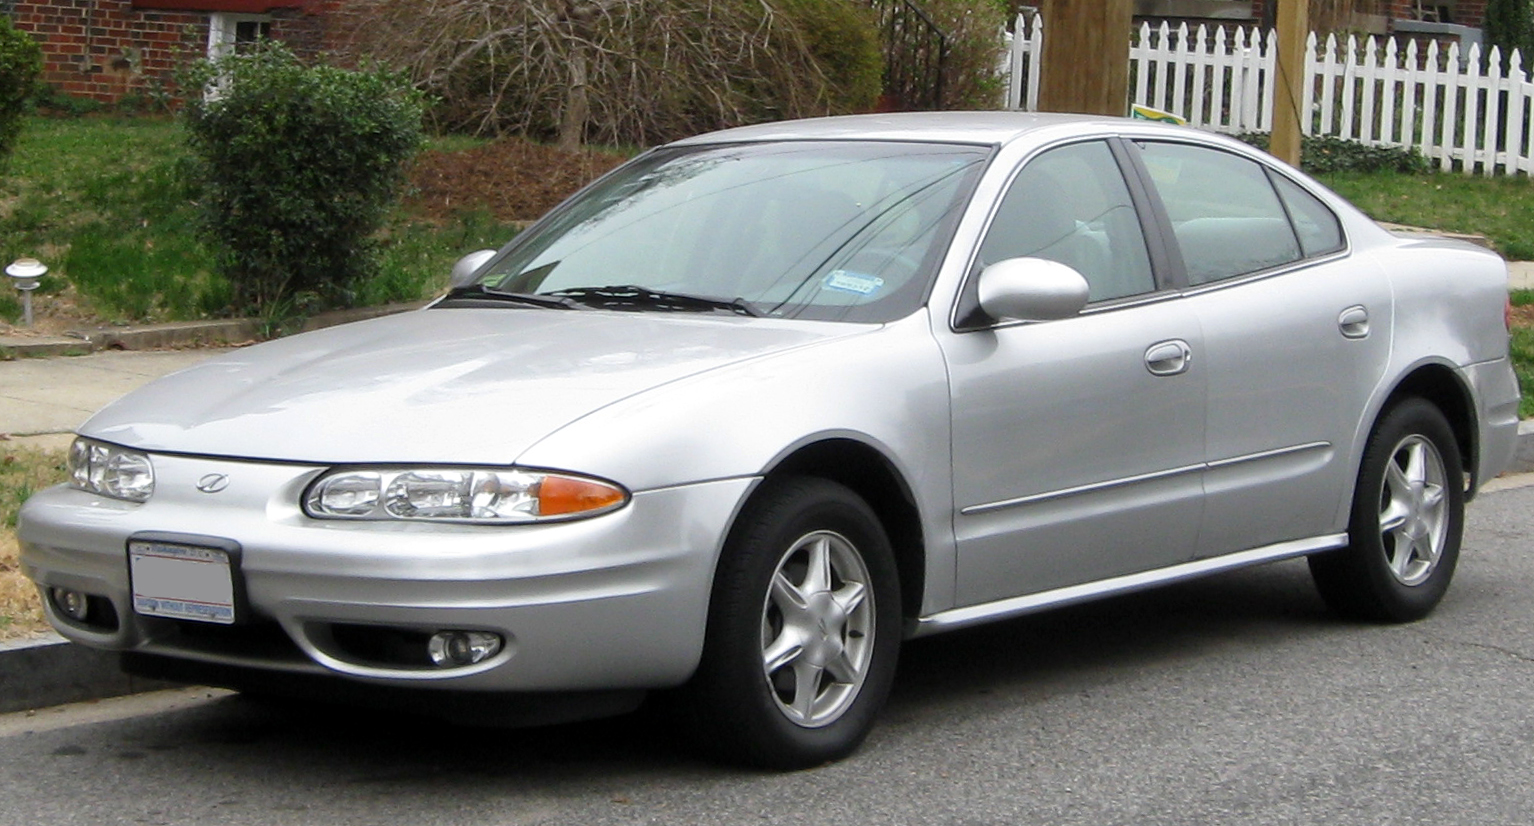 Oldsmobile Alero - Wikipedia